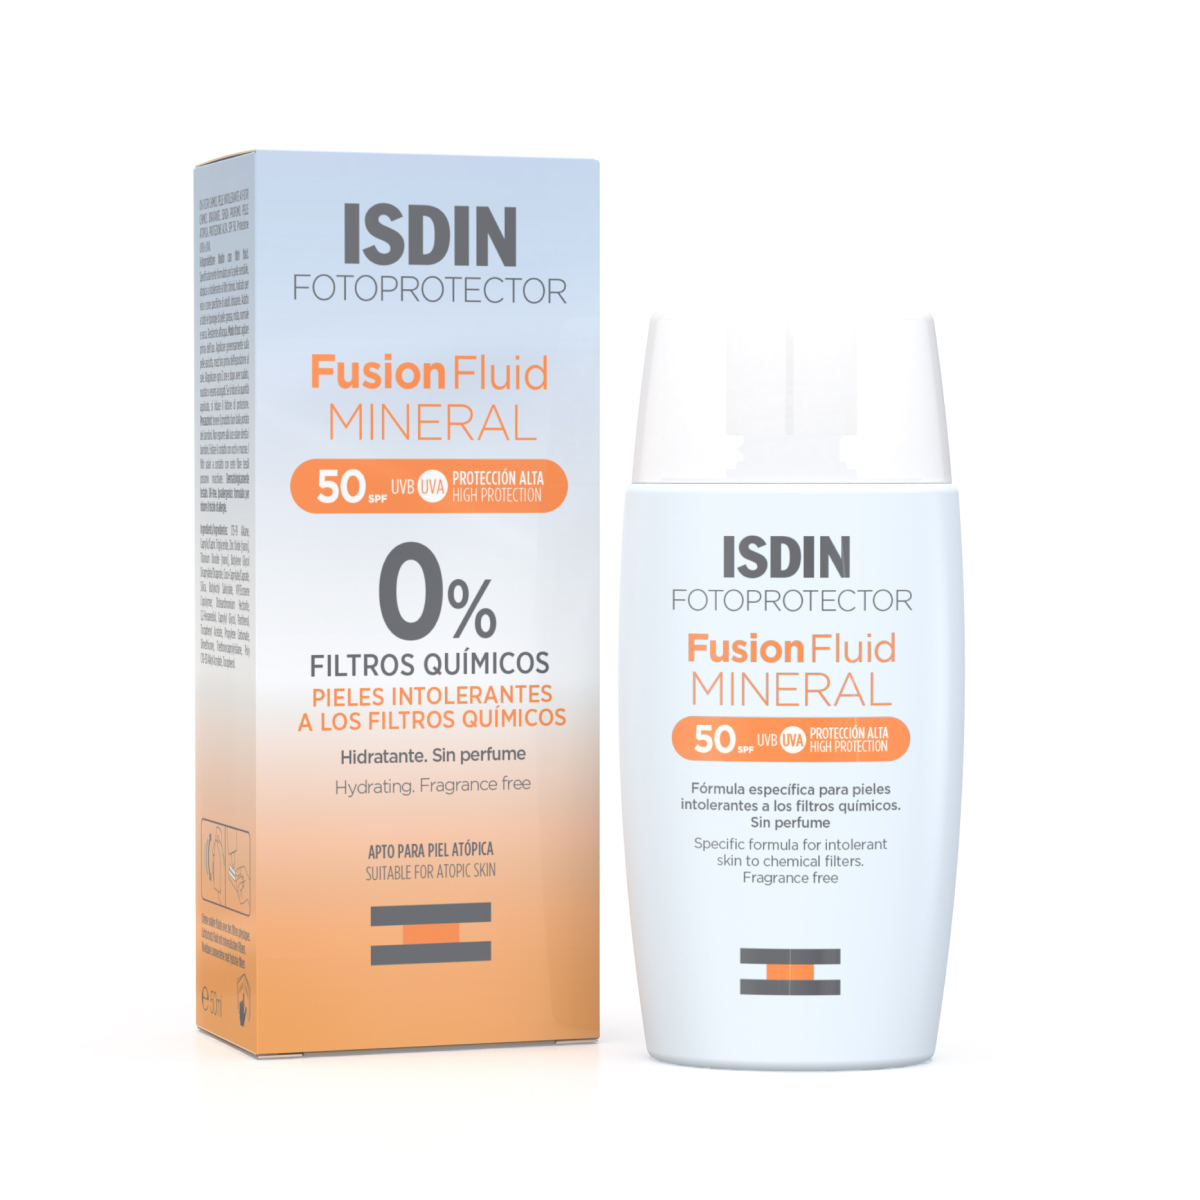 Fotoprotector ISDIN Fusion Fluid MINERAL SPF 50 | ISDIN